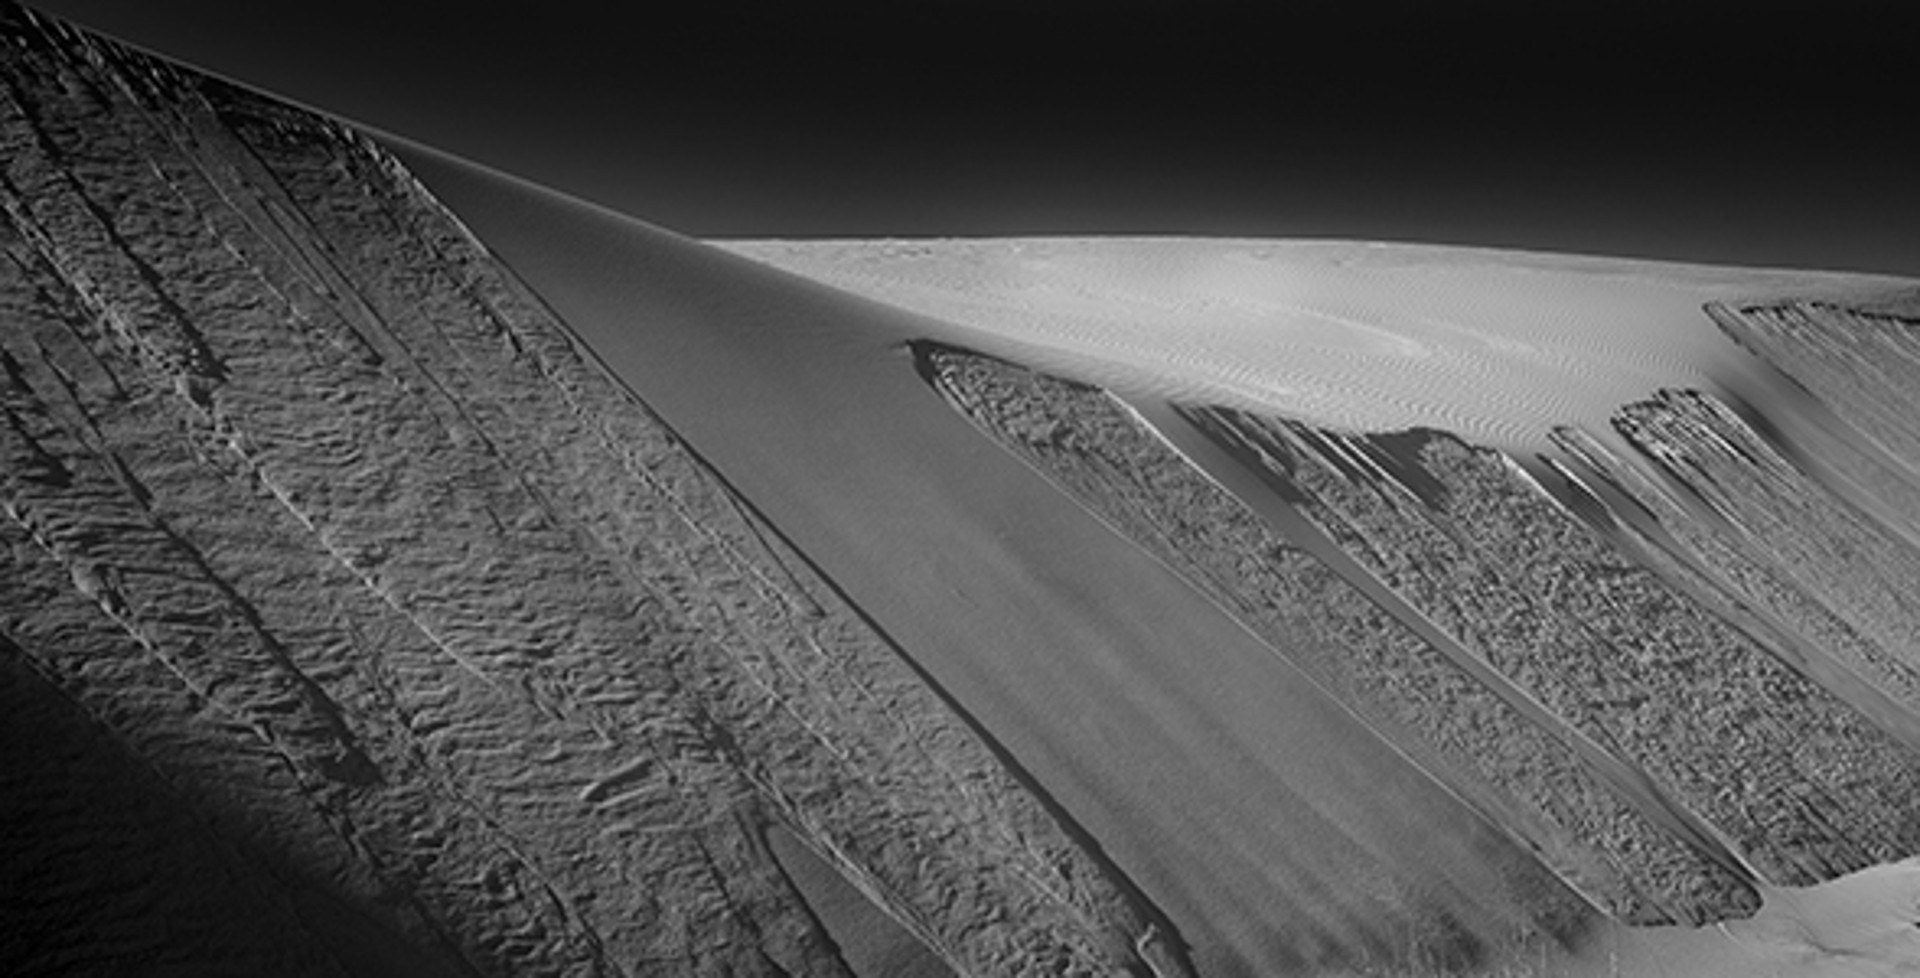 Gypsum Dune 10.25 x 20 by Lance Bell